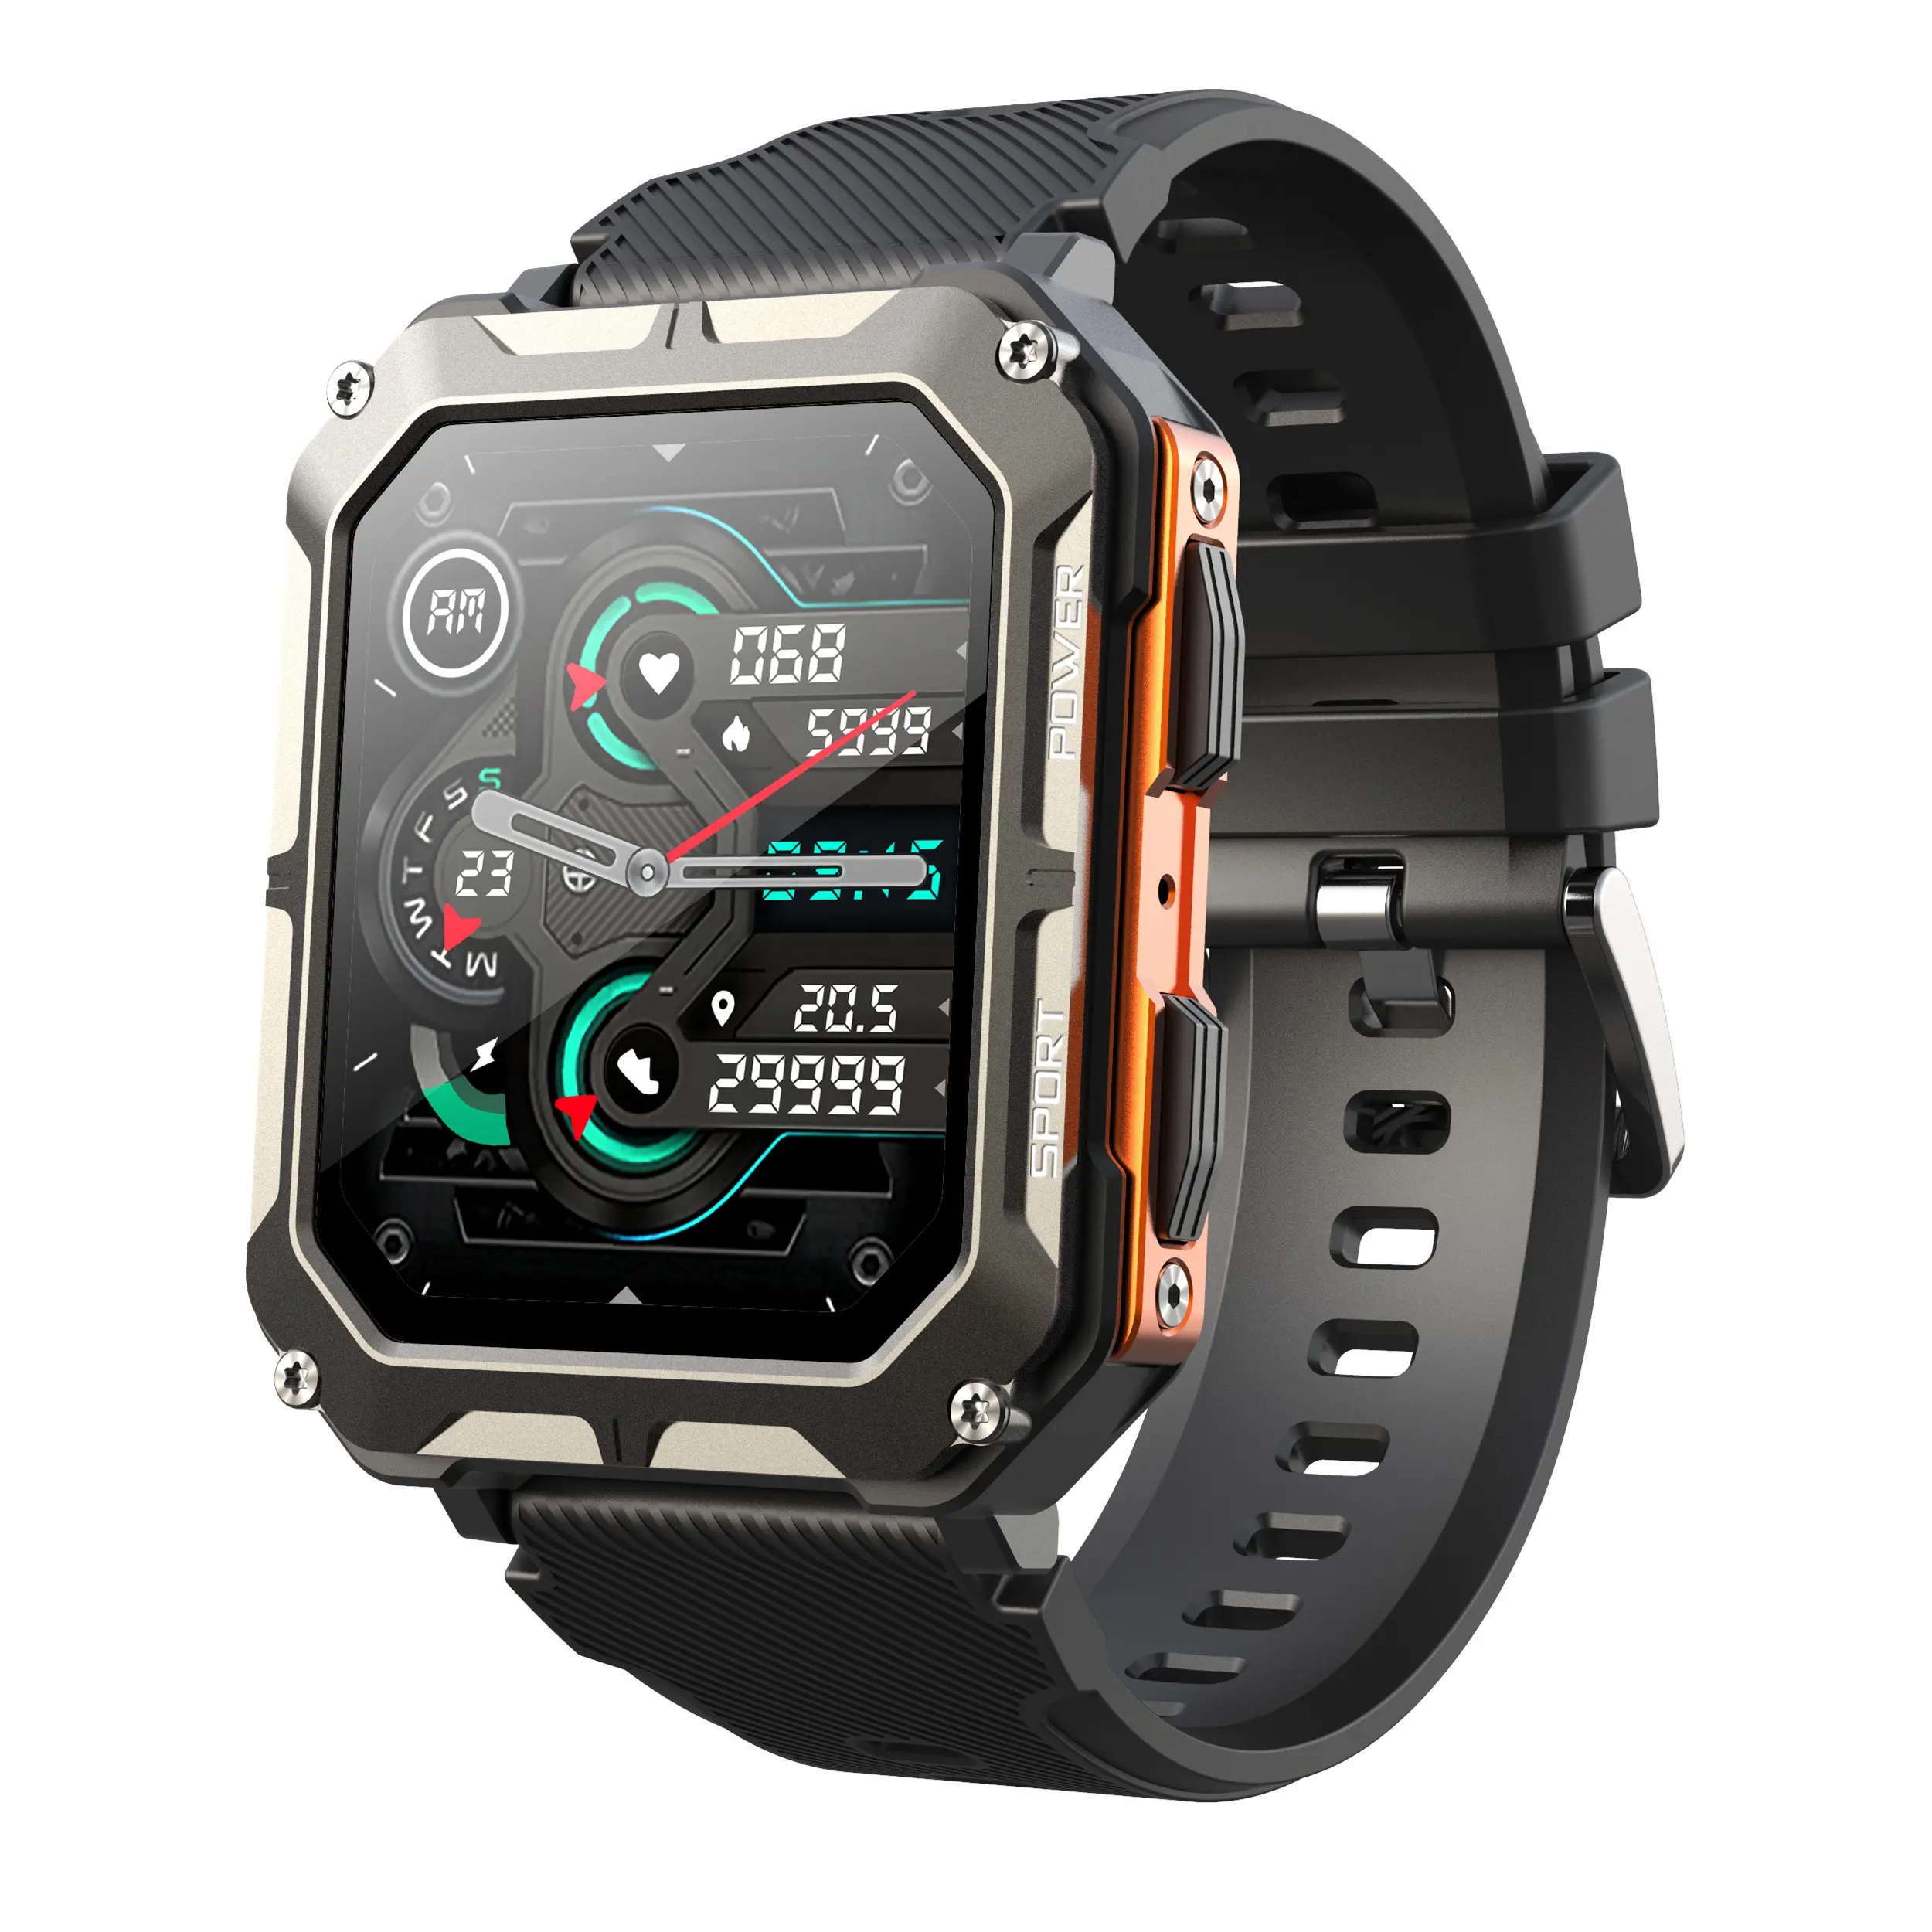 New Arrivals C20 Pro Smart Watch 1.83inch BT call Sports modes large battery IP68 waterproof Men Watches PK C20 Smartwatch